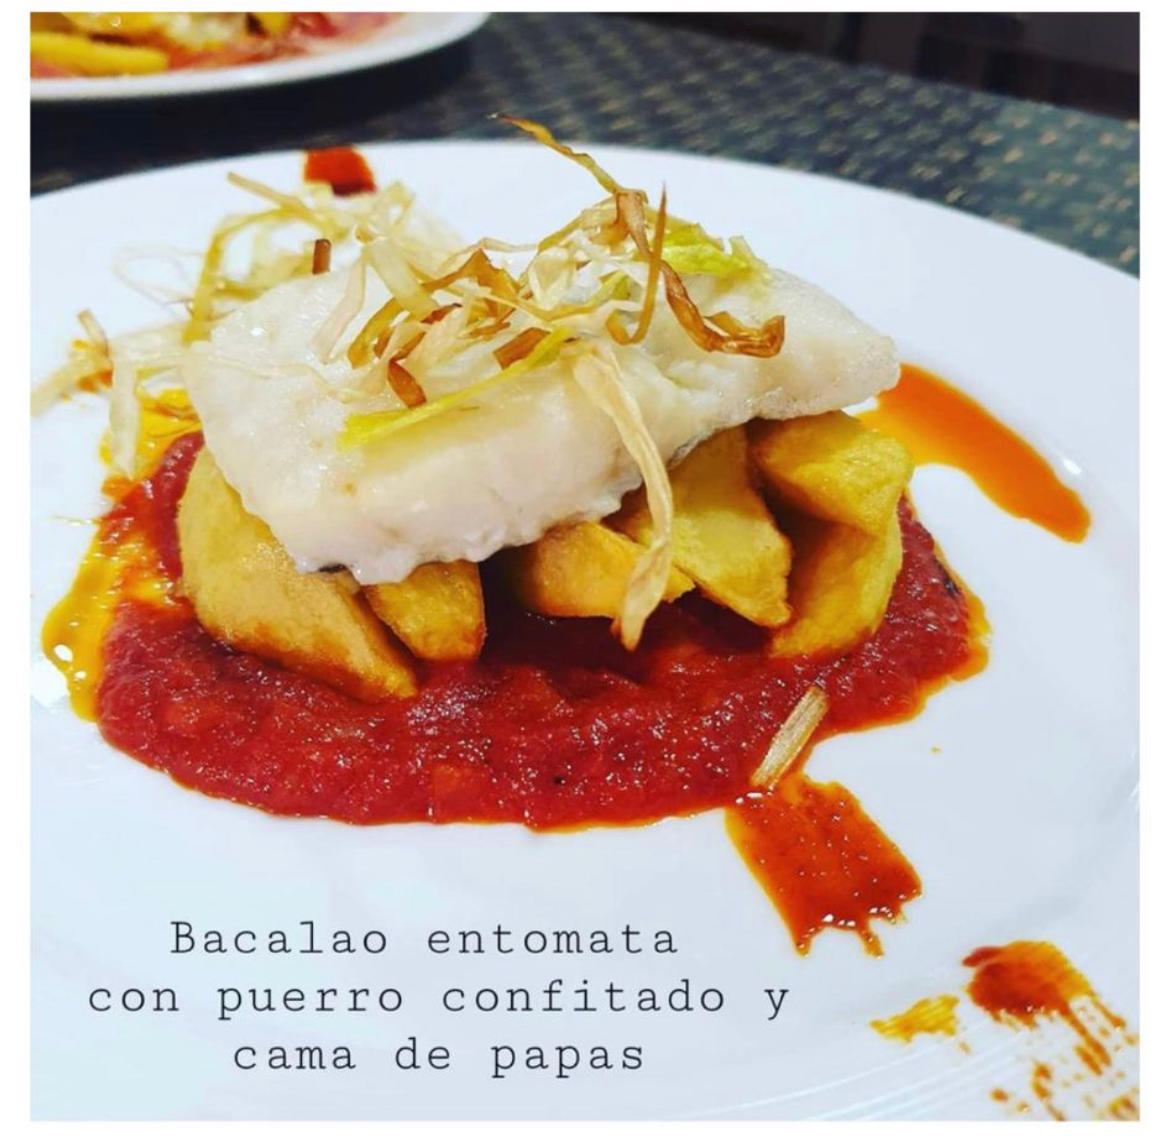 Images Restaurante La Victoria